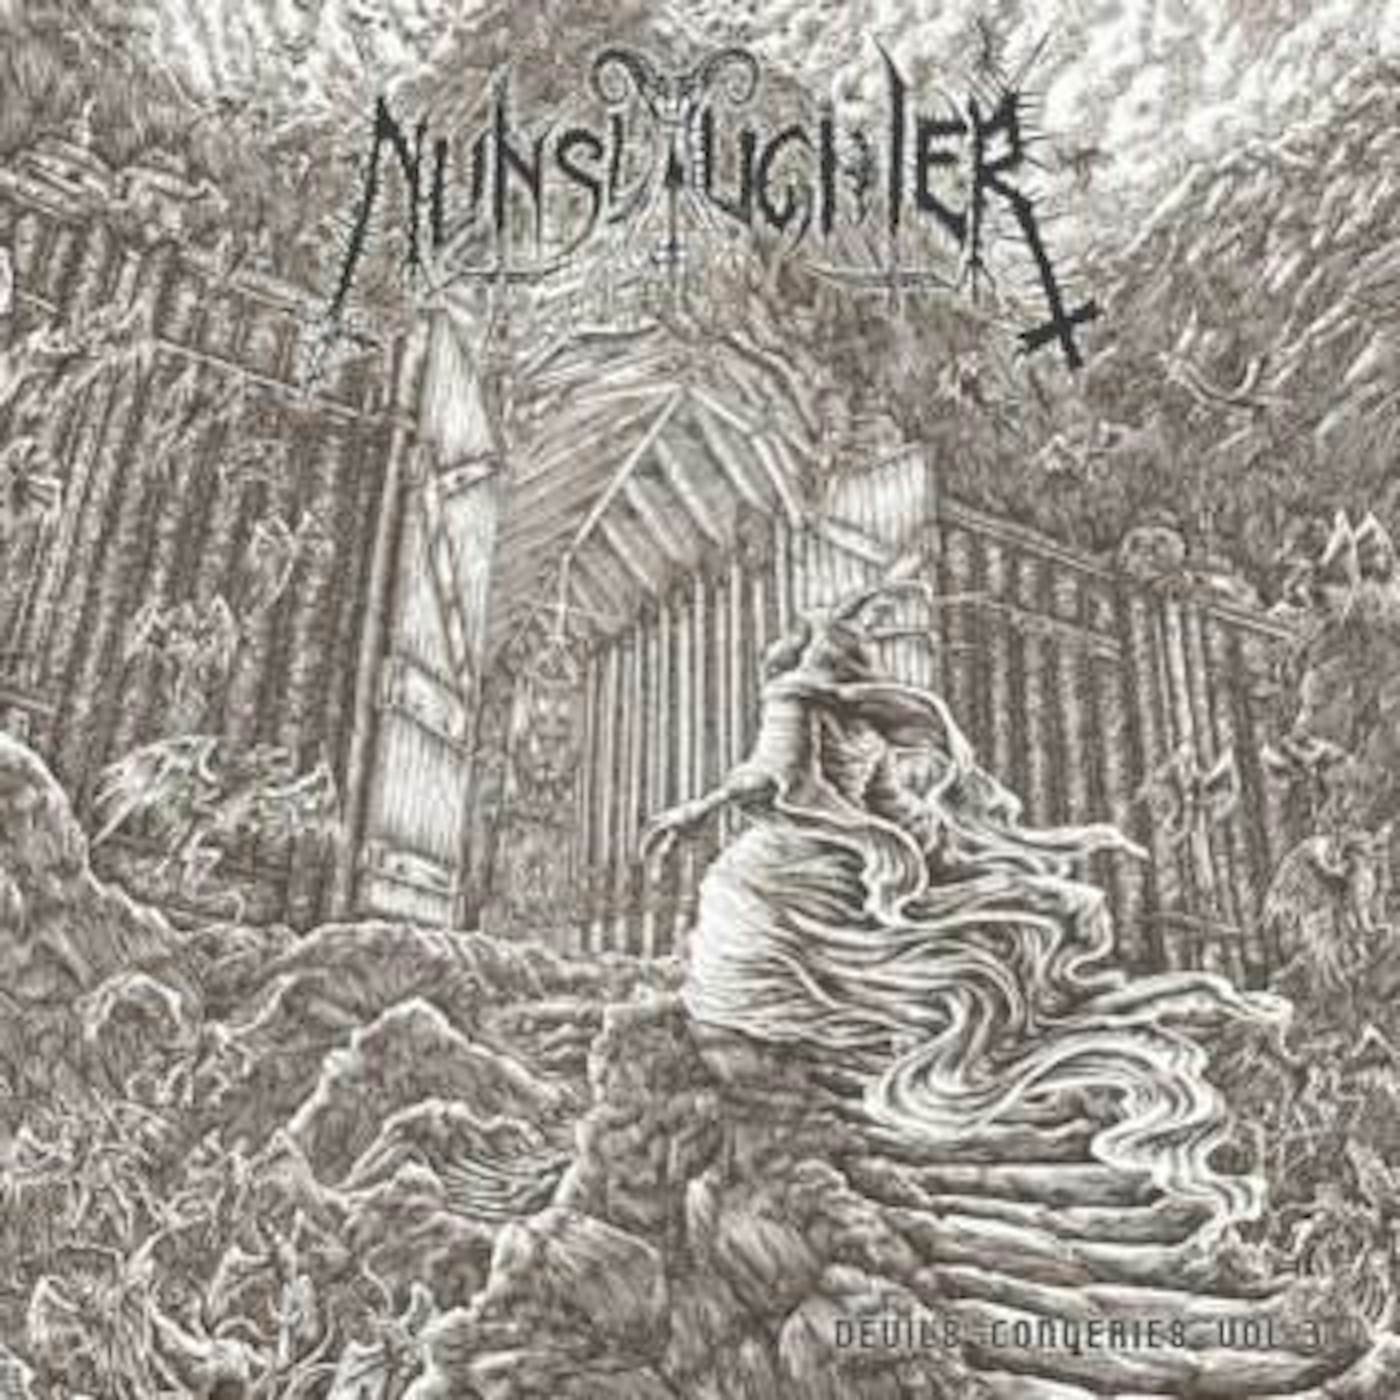 Nunslaughter DEVILS CONGERIES VOL 3 CD